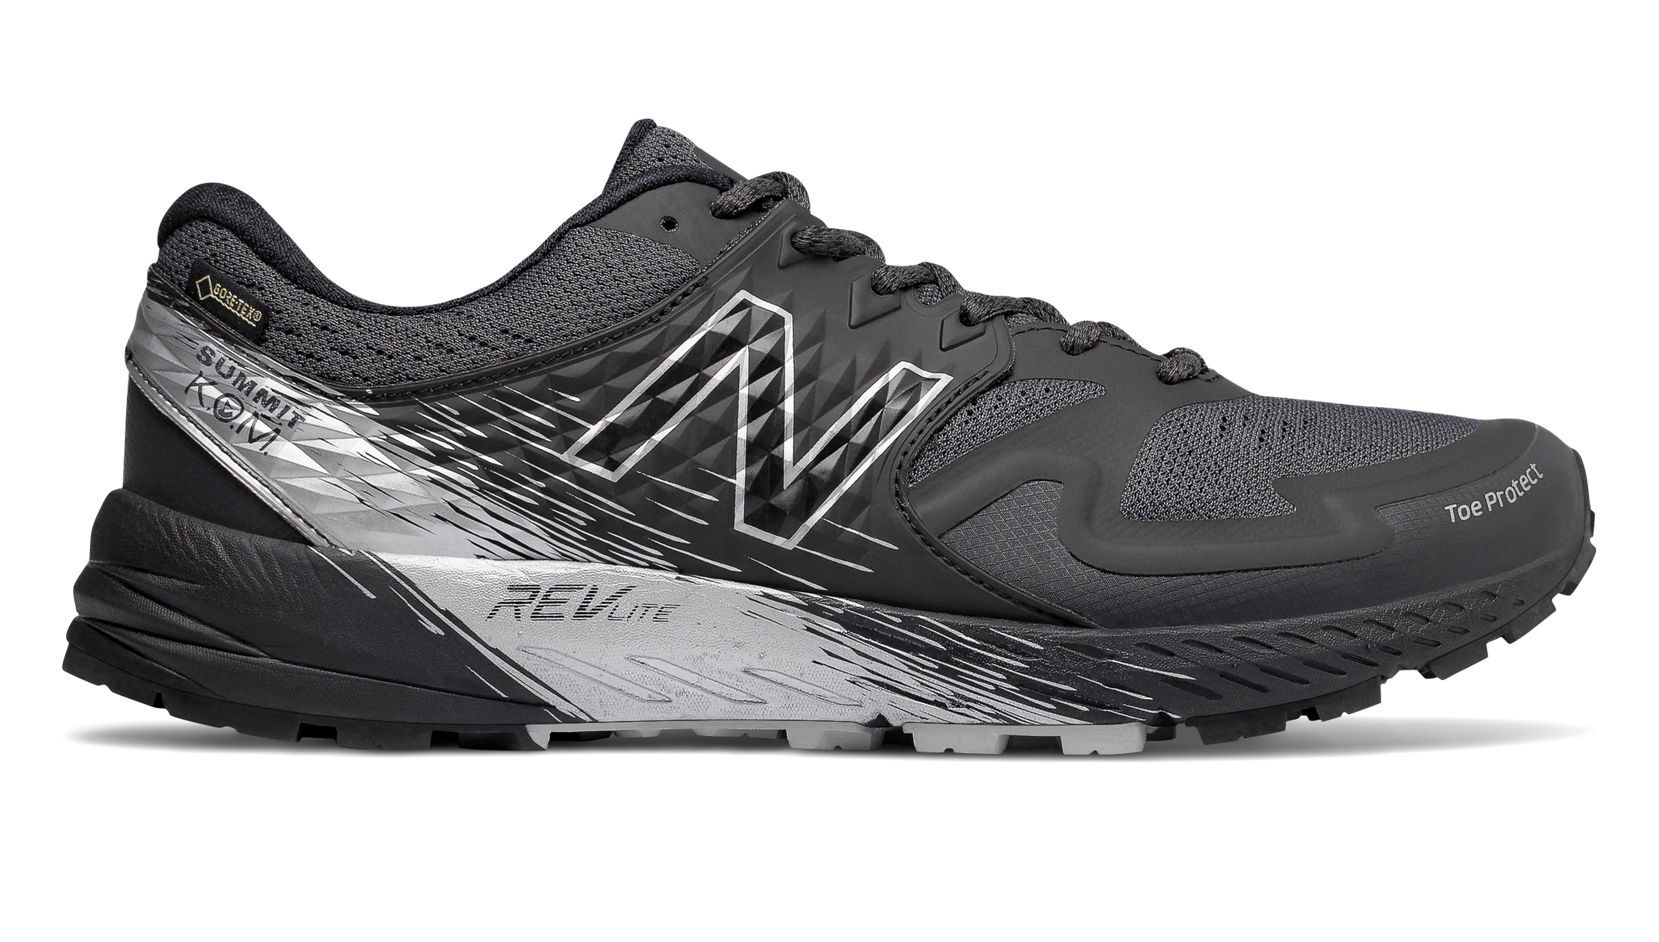 New Balance - Summit K.O.M GTX - Trail running shoes - Men's